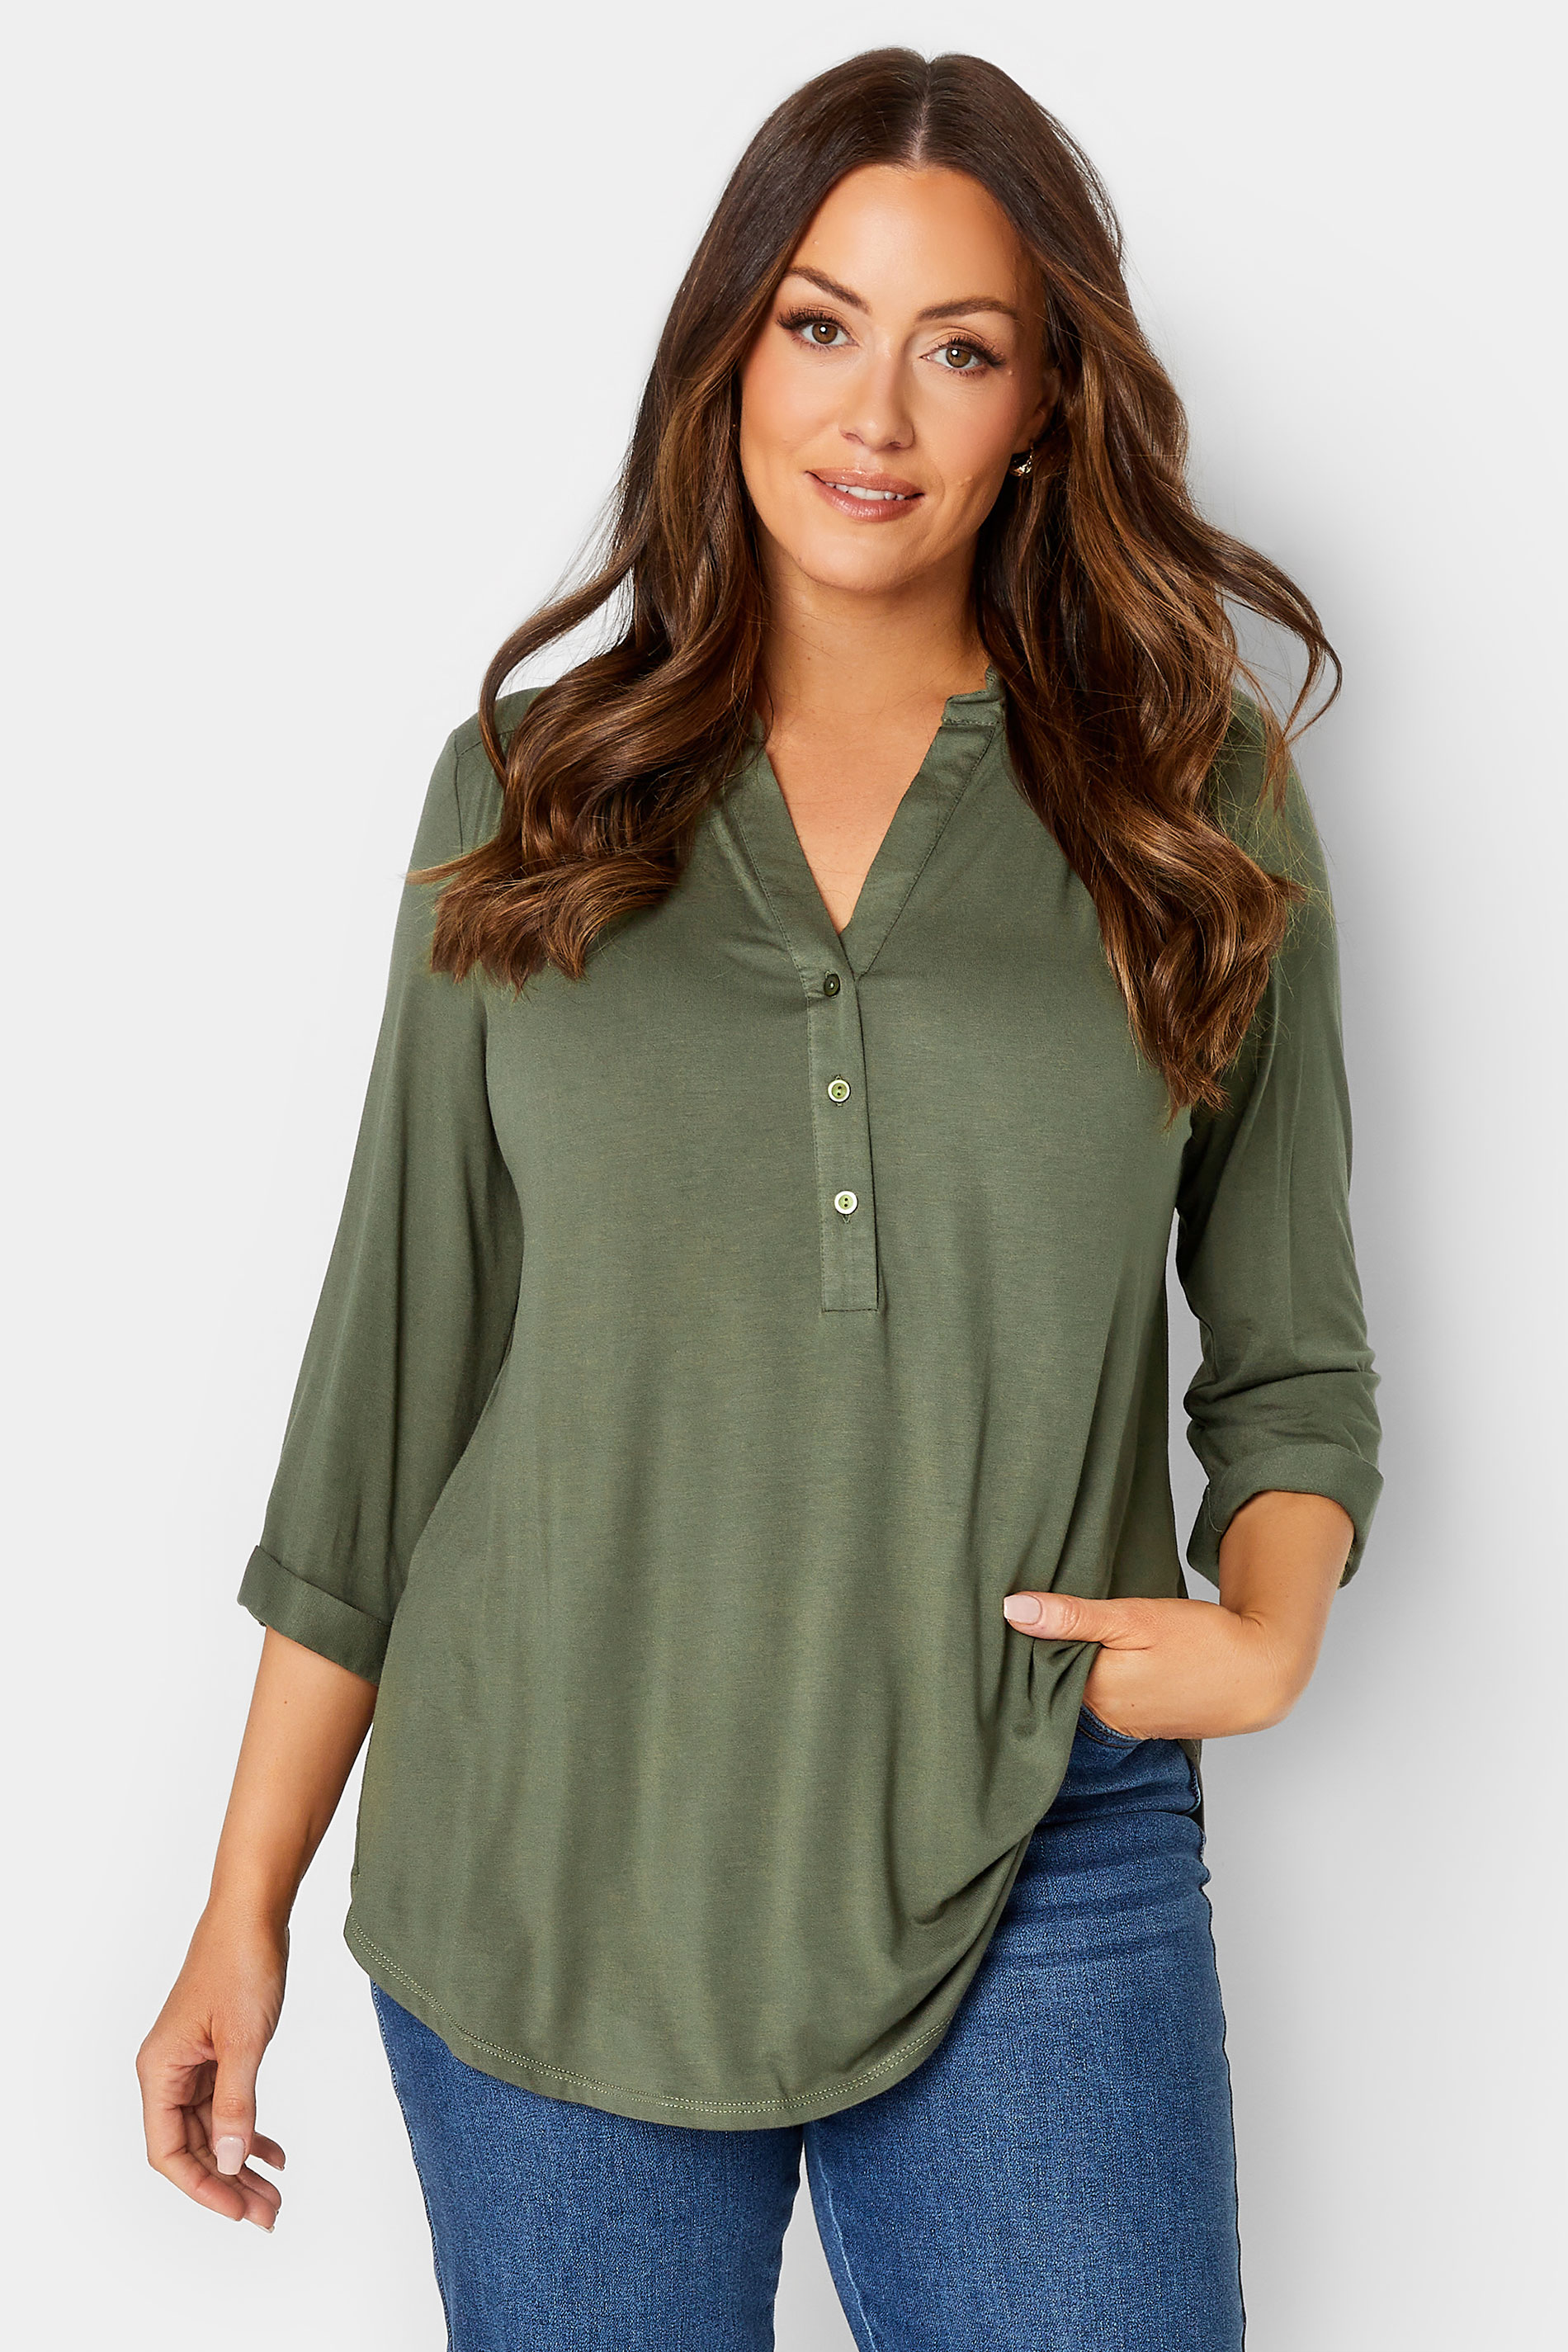 M&Co Green Placket Jersey Shirt | M&Co 1